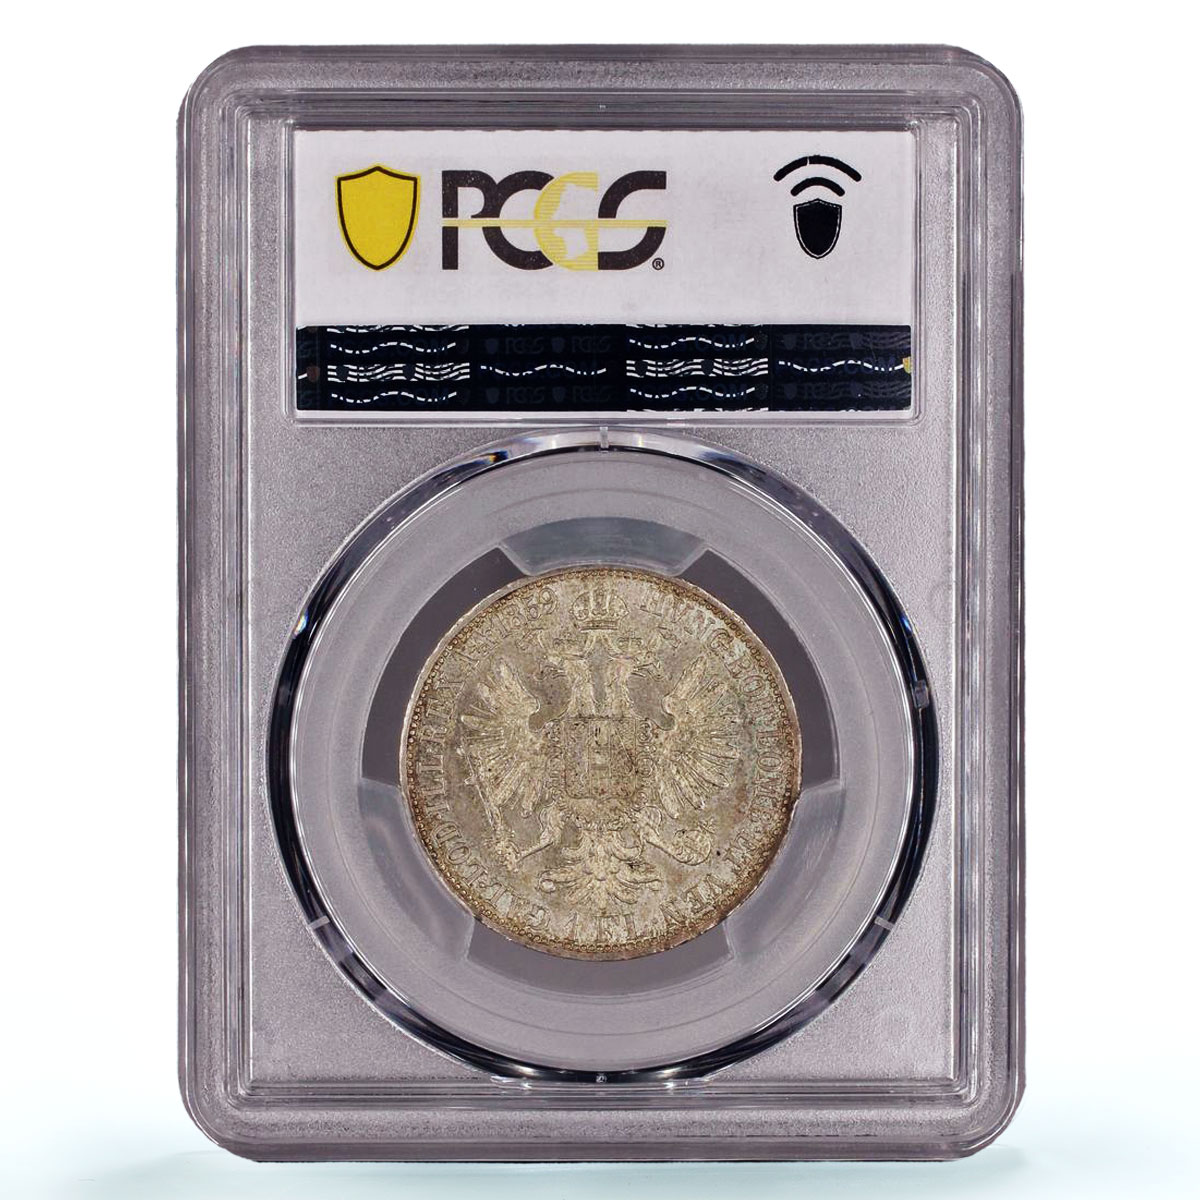 Austria 1 florin Franz Joseph I Coinage KM-2219 MS63 PCGS silver coin 1859 A